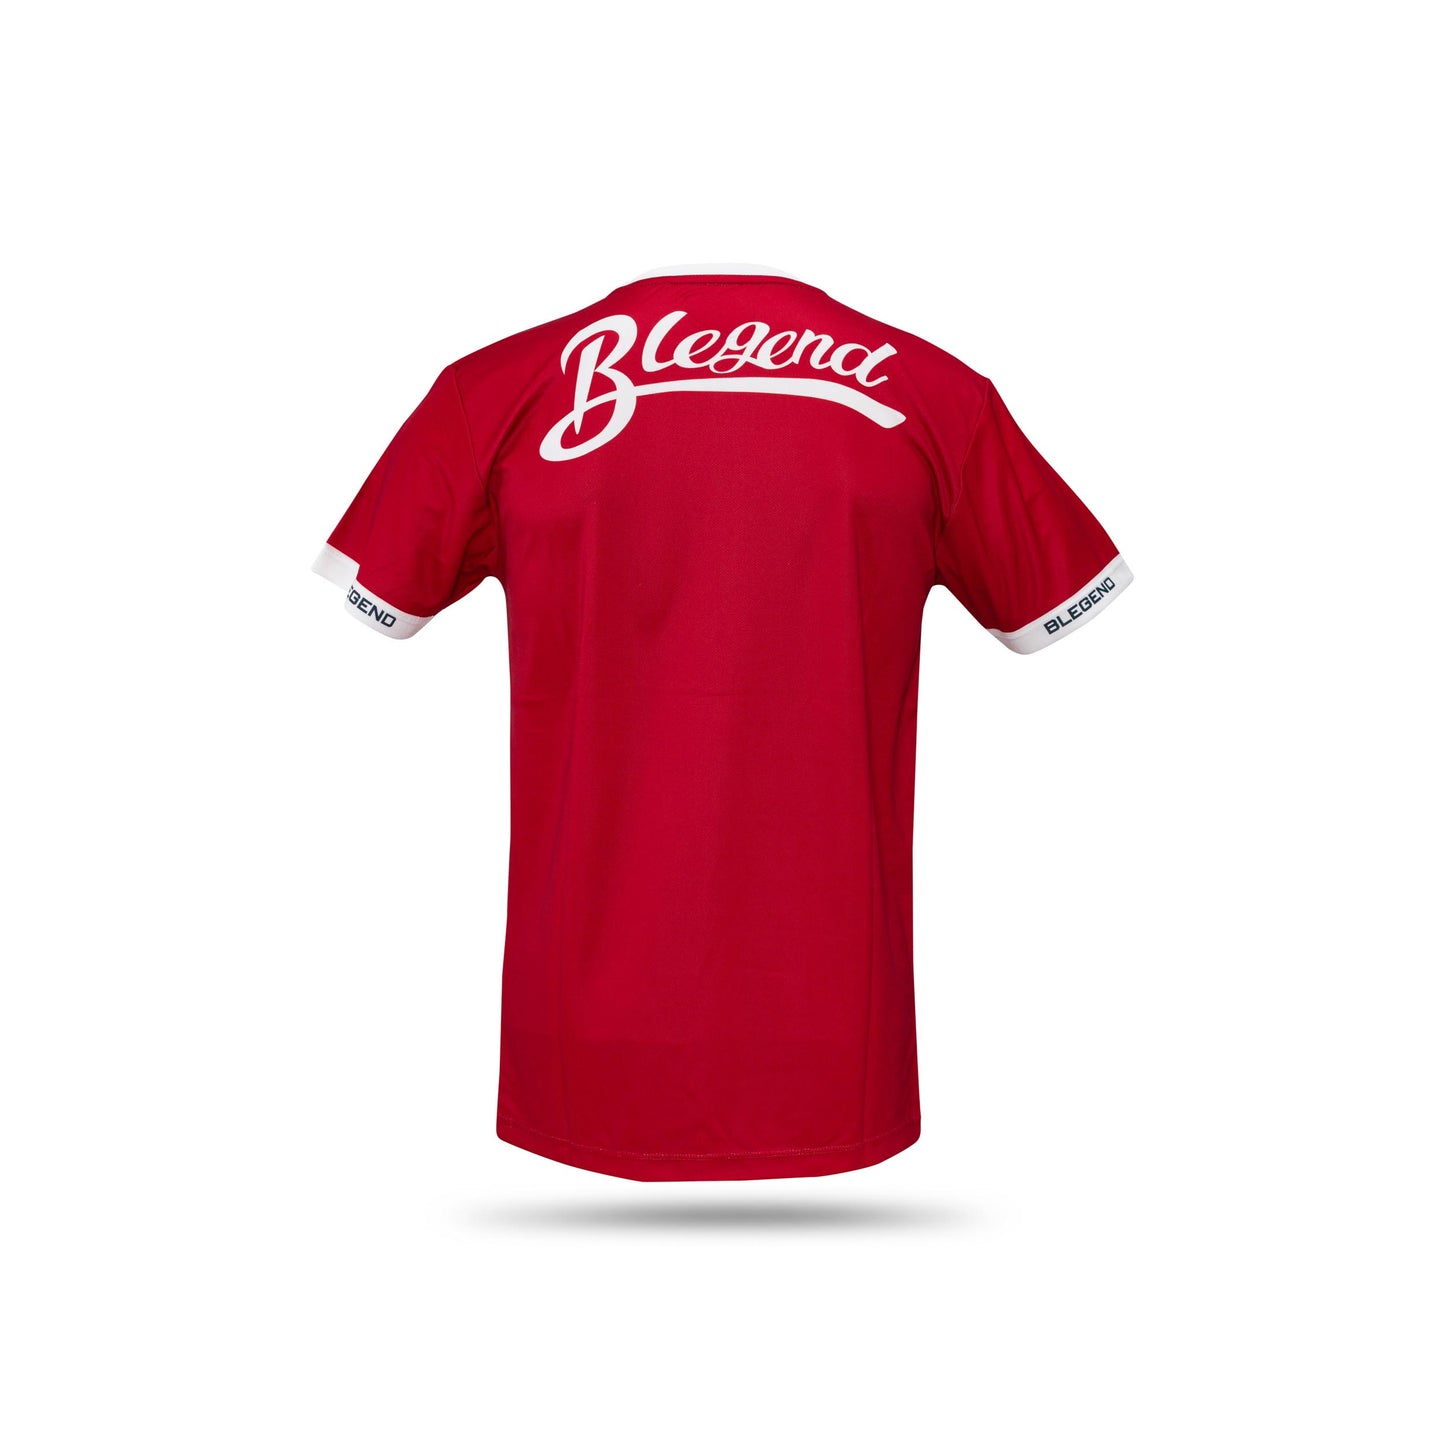 Blegend Muay Thai, Boxing T-shirt LND Red